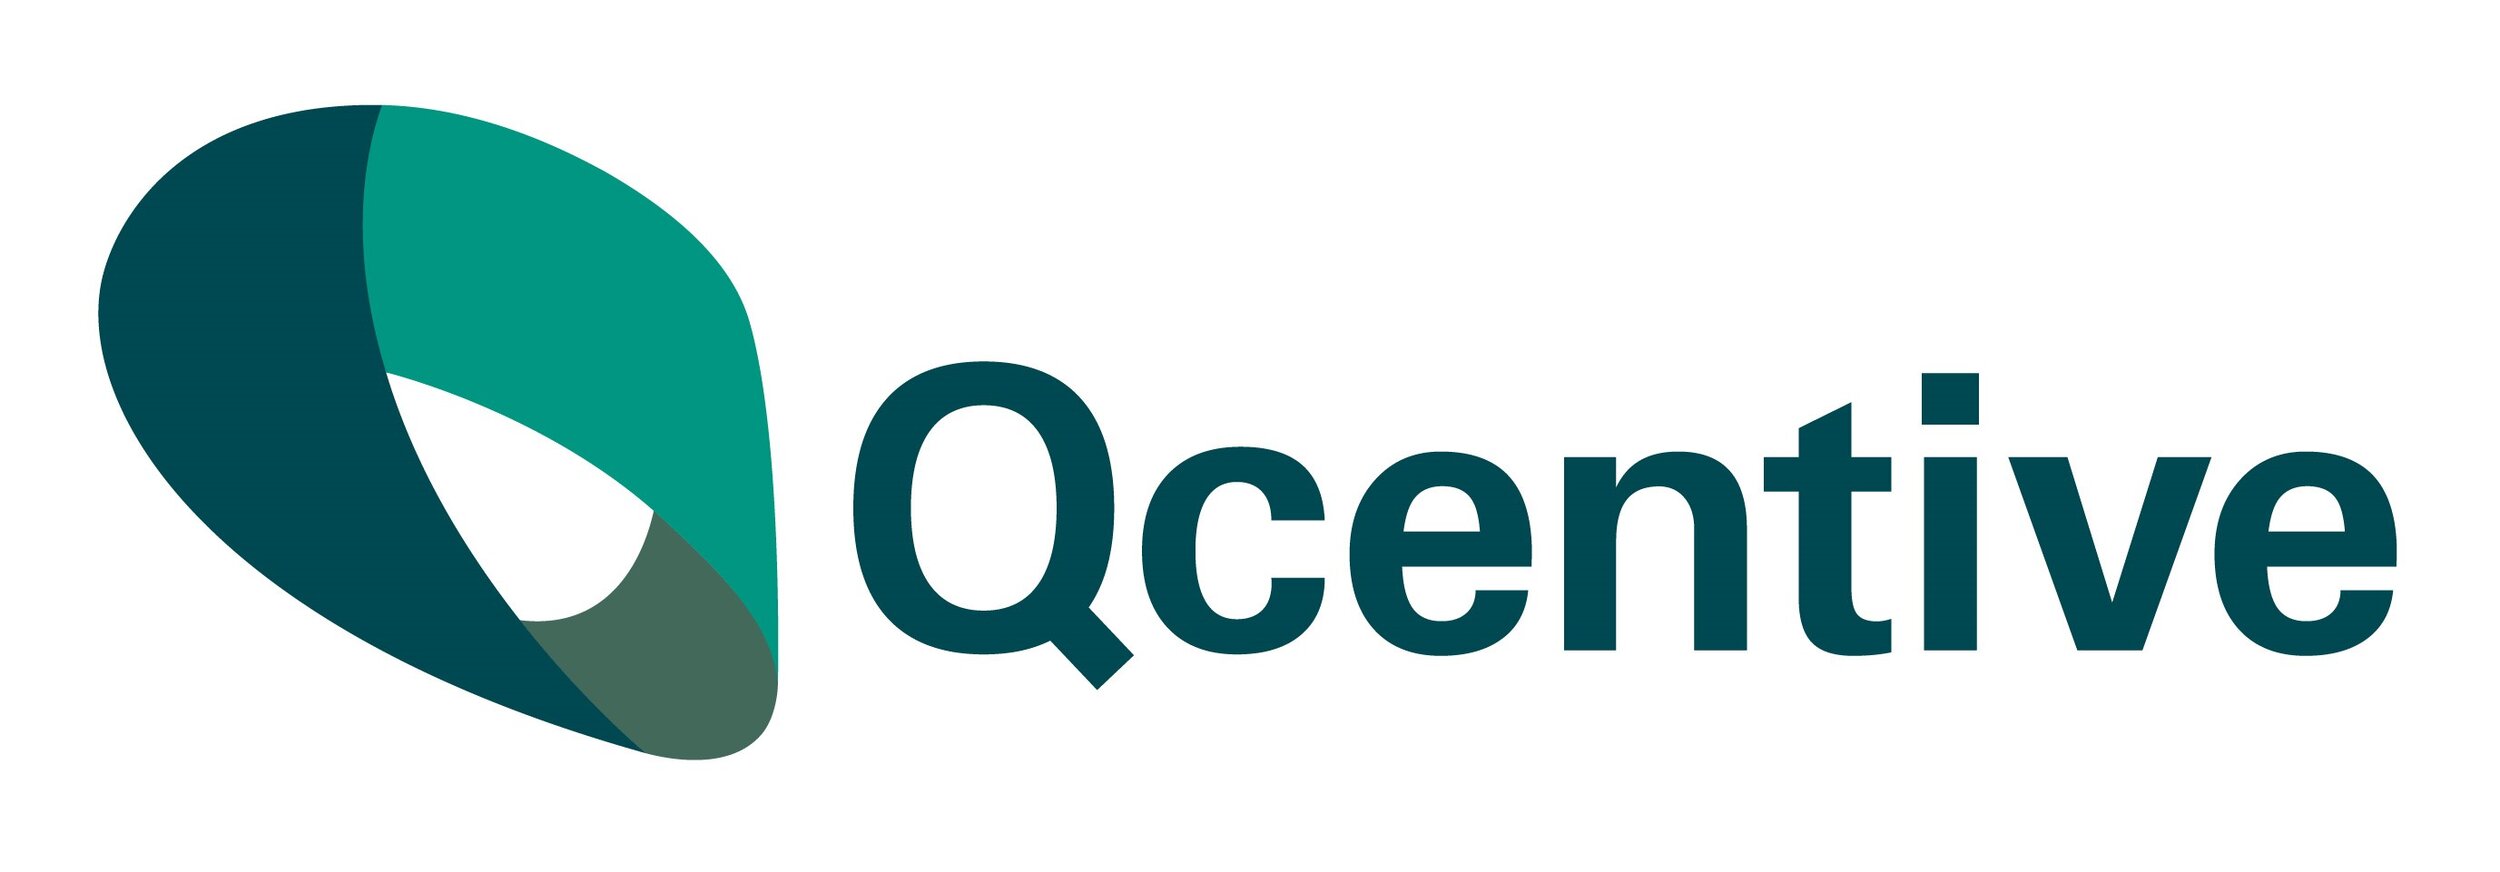 Qcentive-logo.jpg